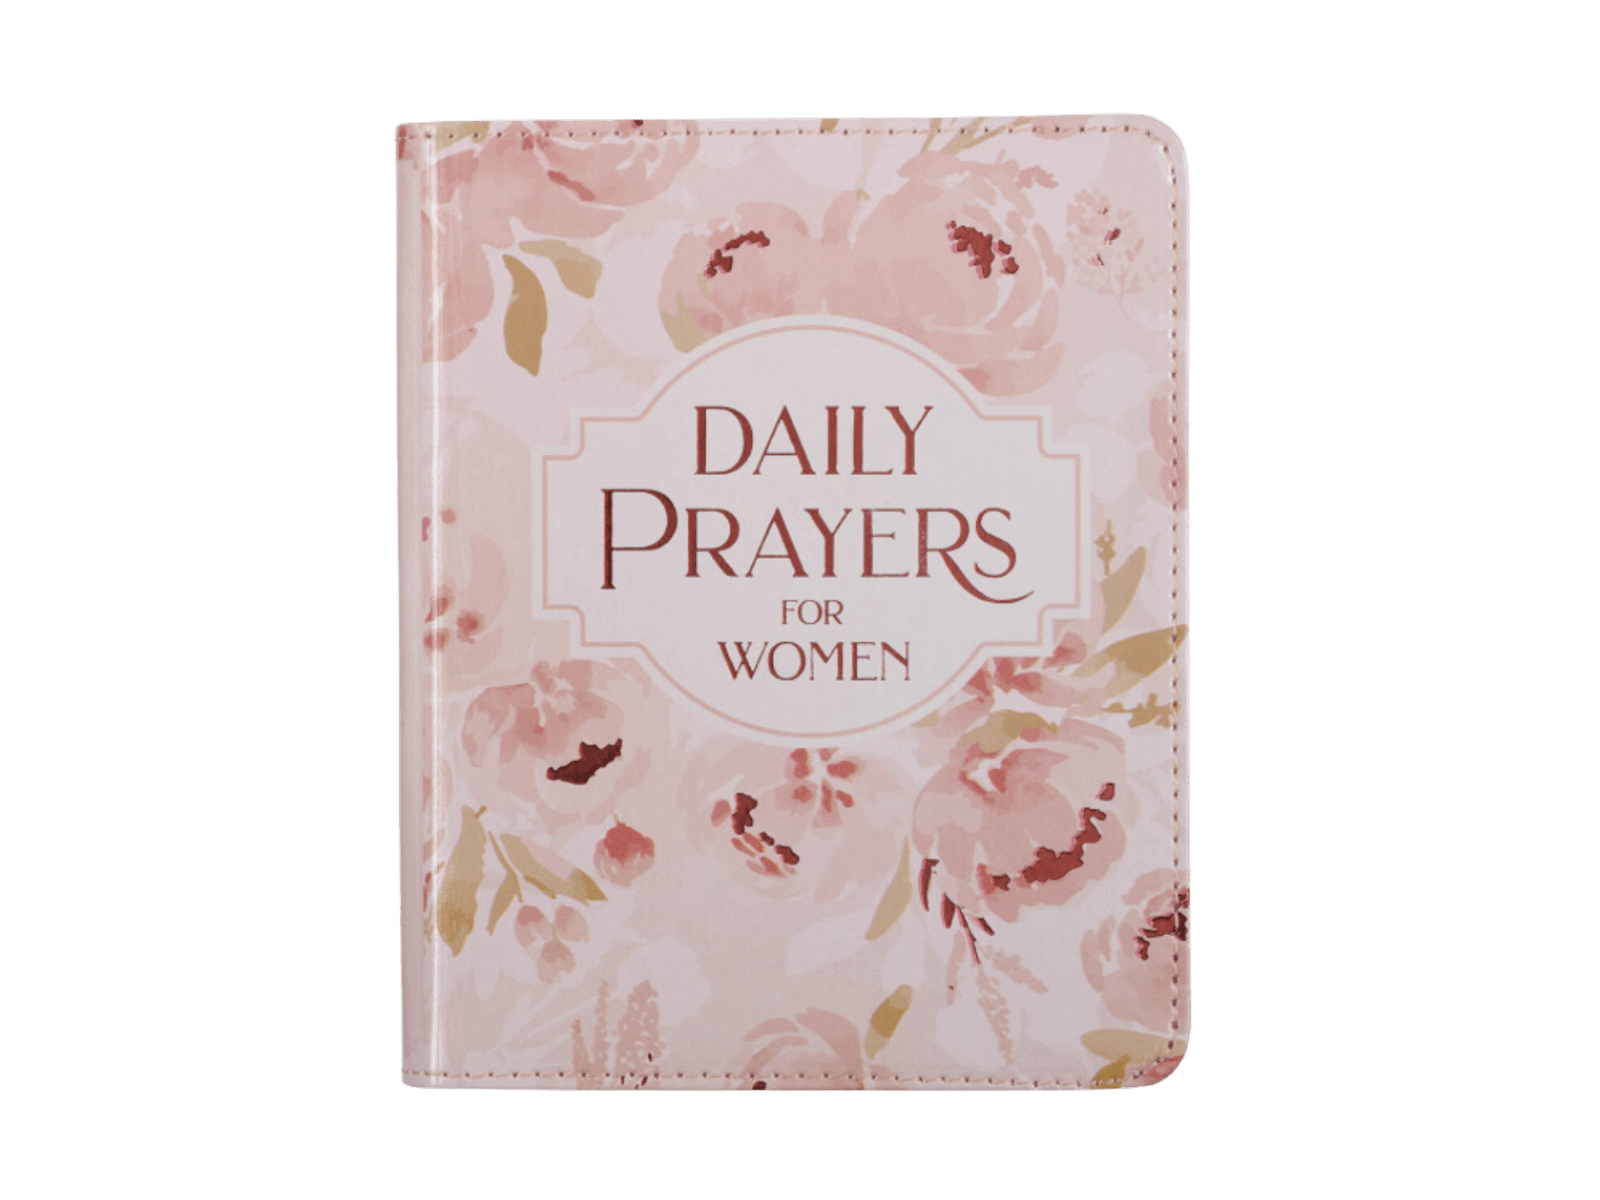 Daily Prayers For Women - Devotional